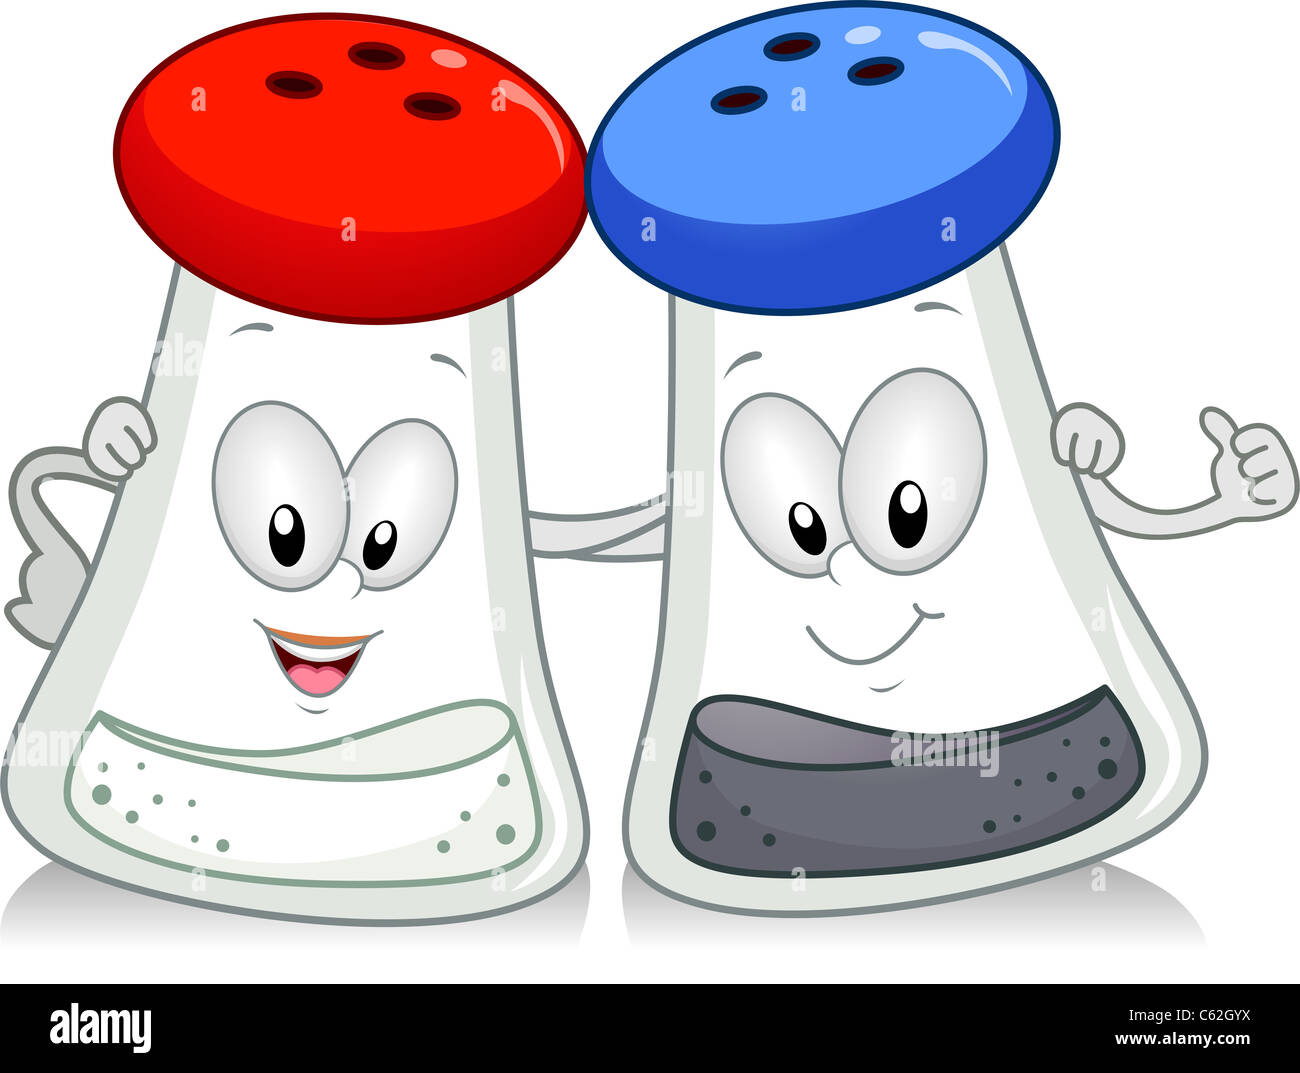 https://c8.alamy.com/comp/C62GYX/illustration-of-a-salt-and-pepper-shaker-hanging-out-together-C62GYX.jpg